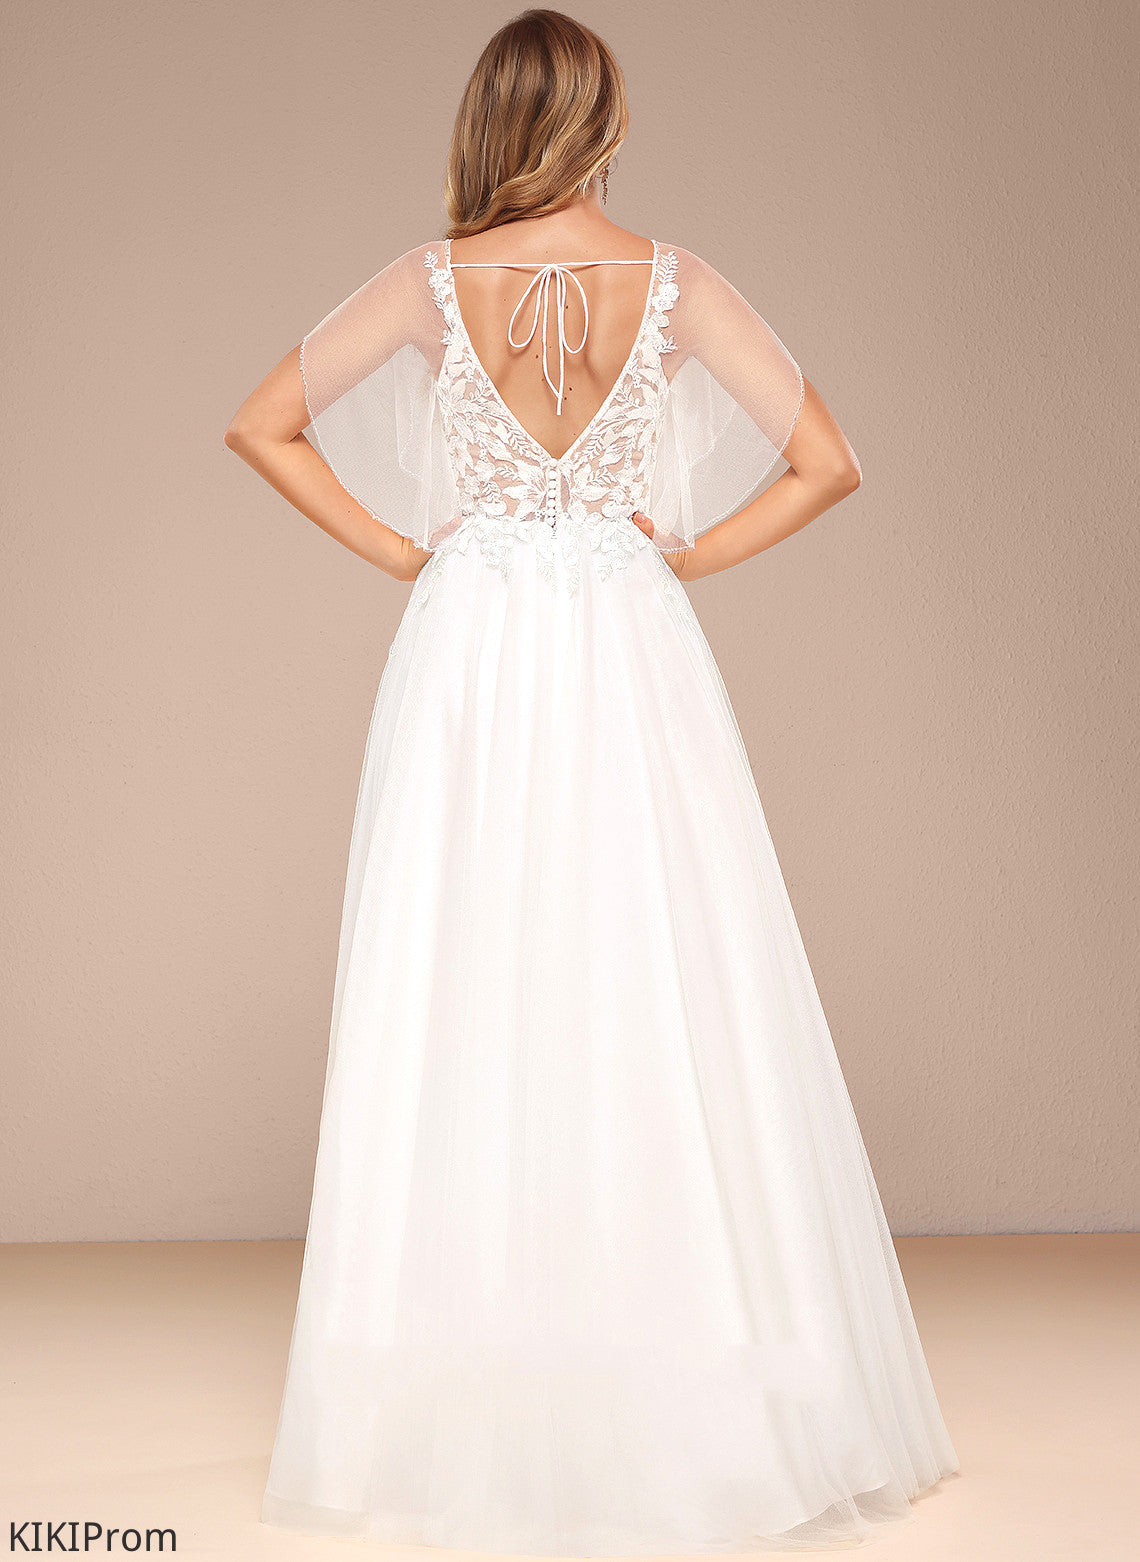 V-neck A-Line Johanna Wedding Dresses Wedding With Sequins Floor-Length Ruffle Dress Tulle Lace